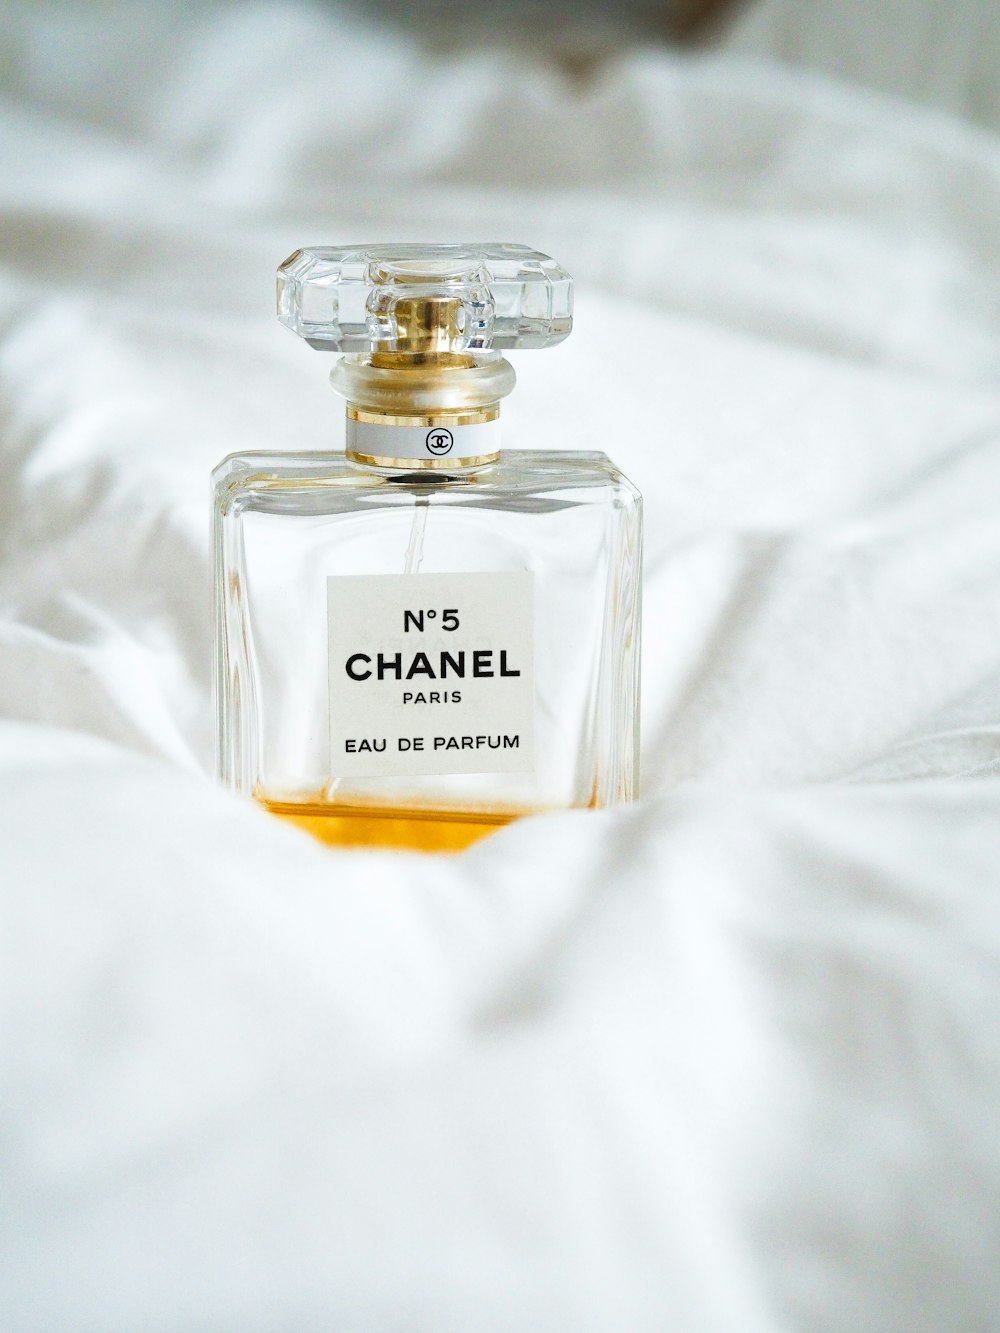 N5 Chanel fragrance bottle on white surface photo – Free Paris Image on  Unsplash